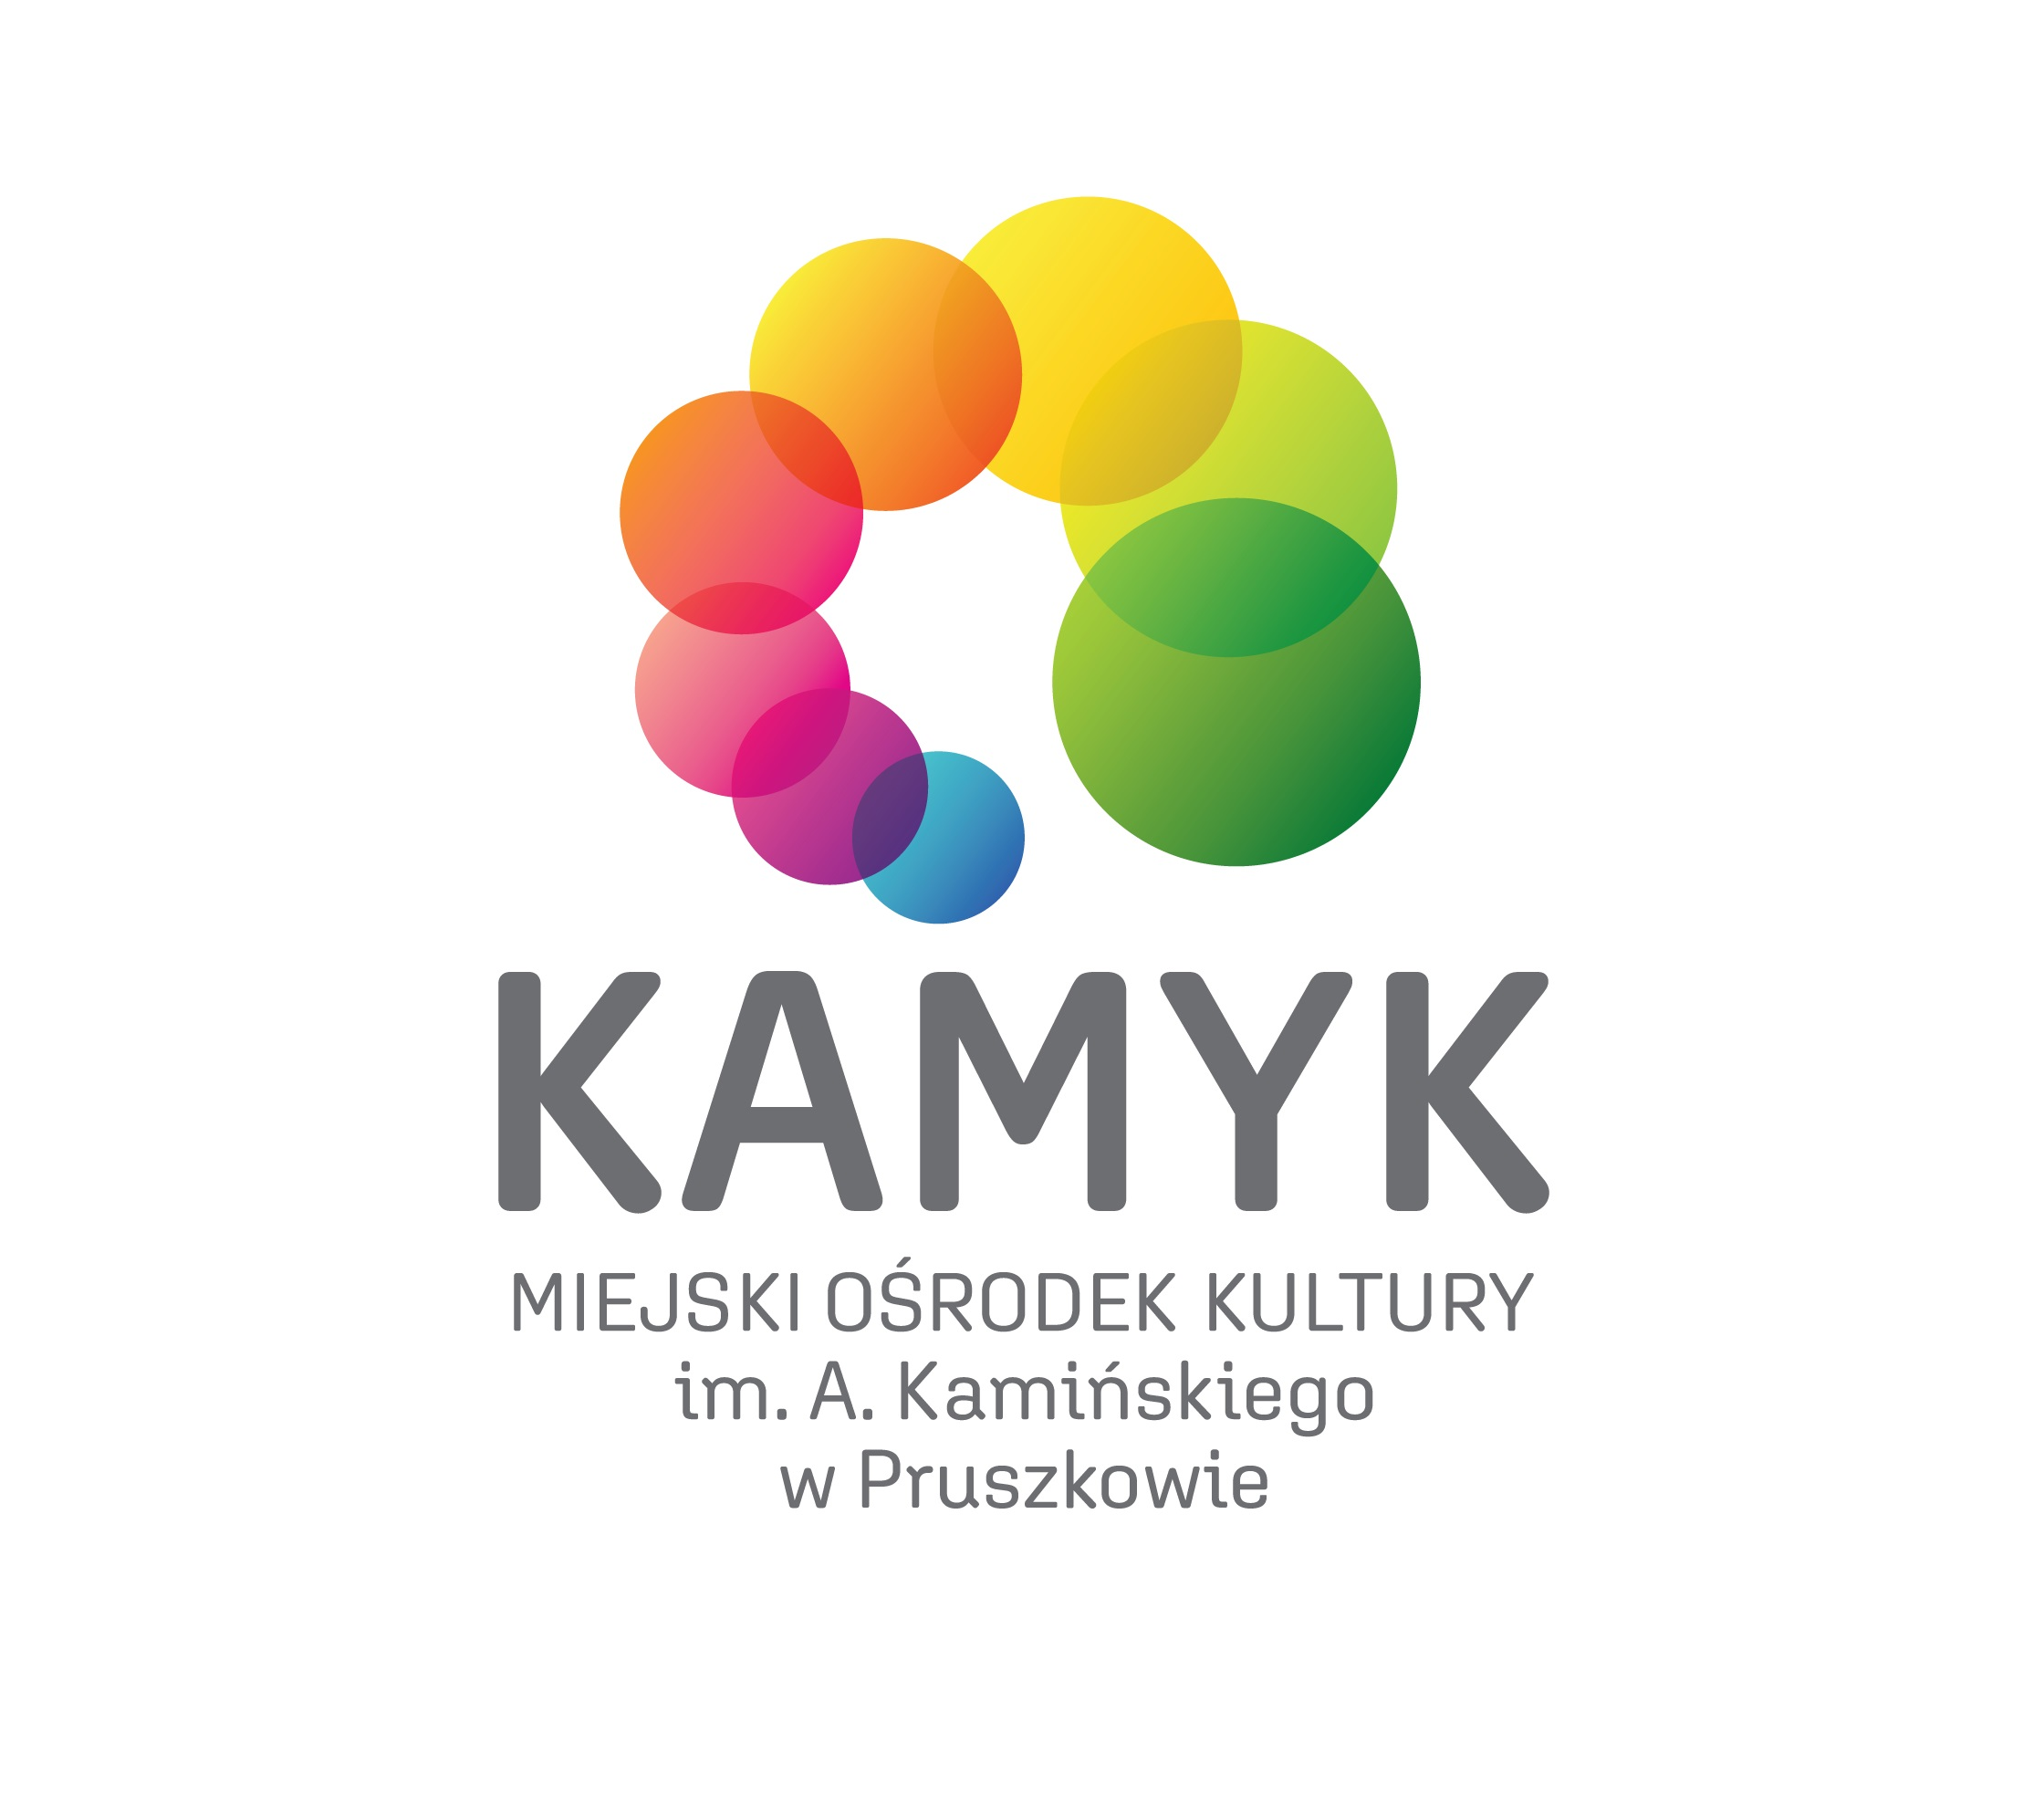 MOK Kamyk - logo